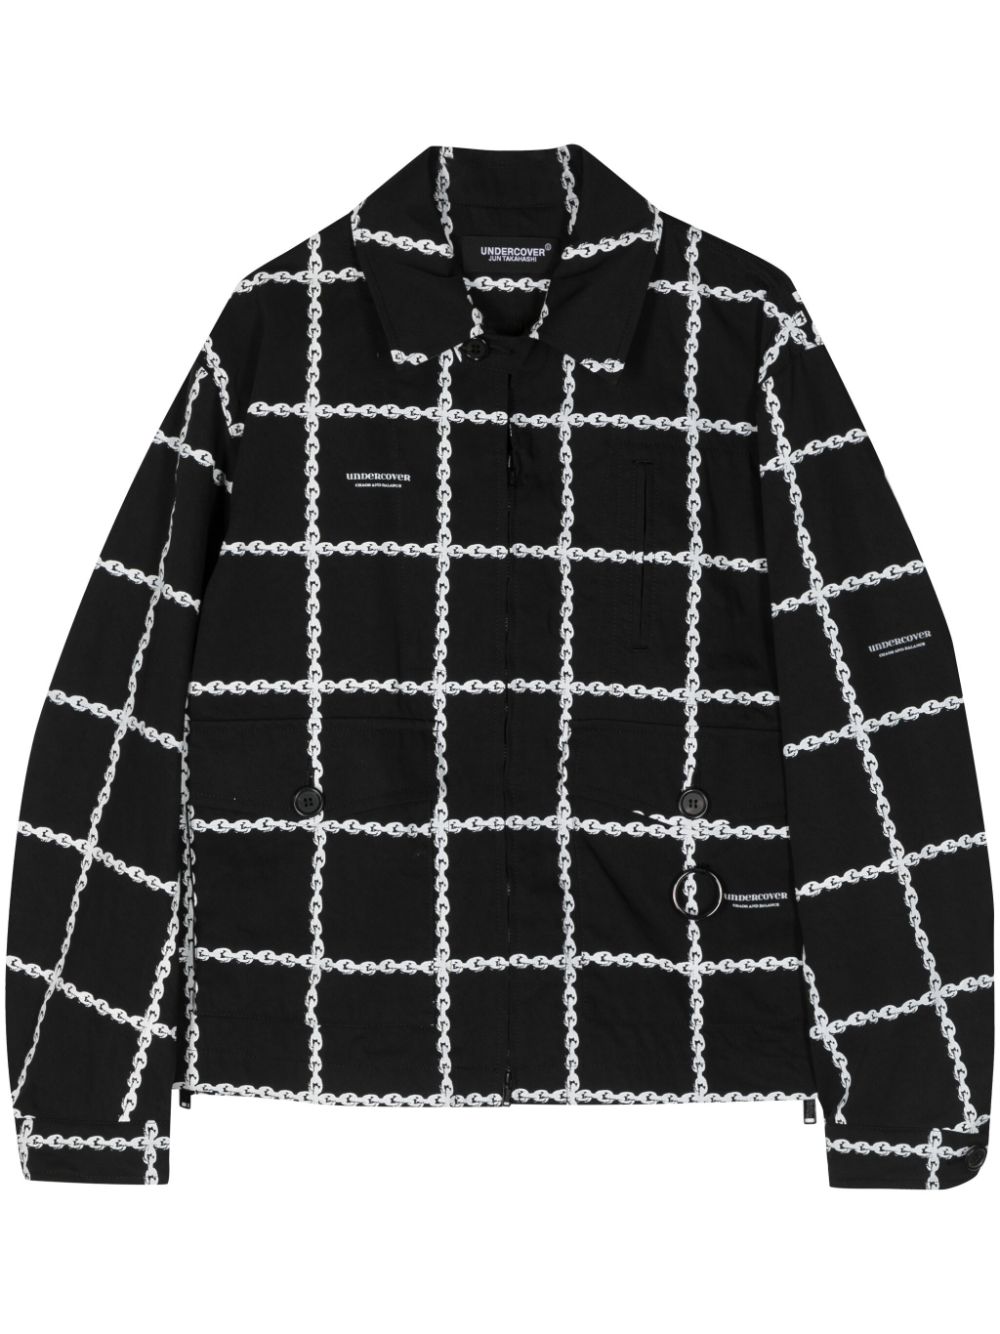 chain-print shirt jacket